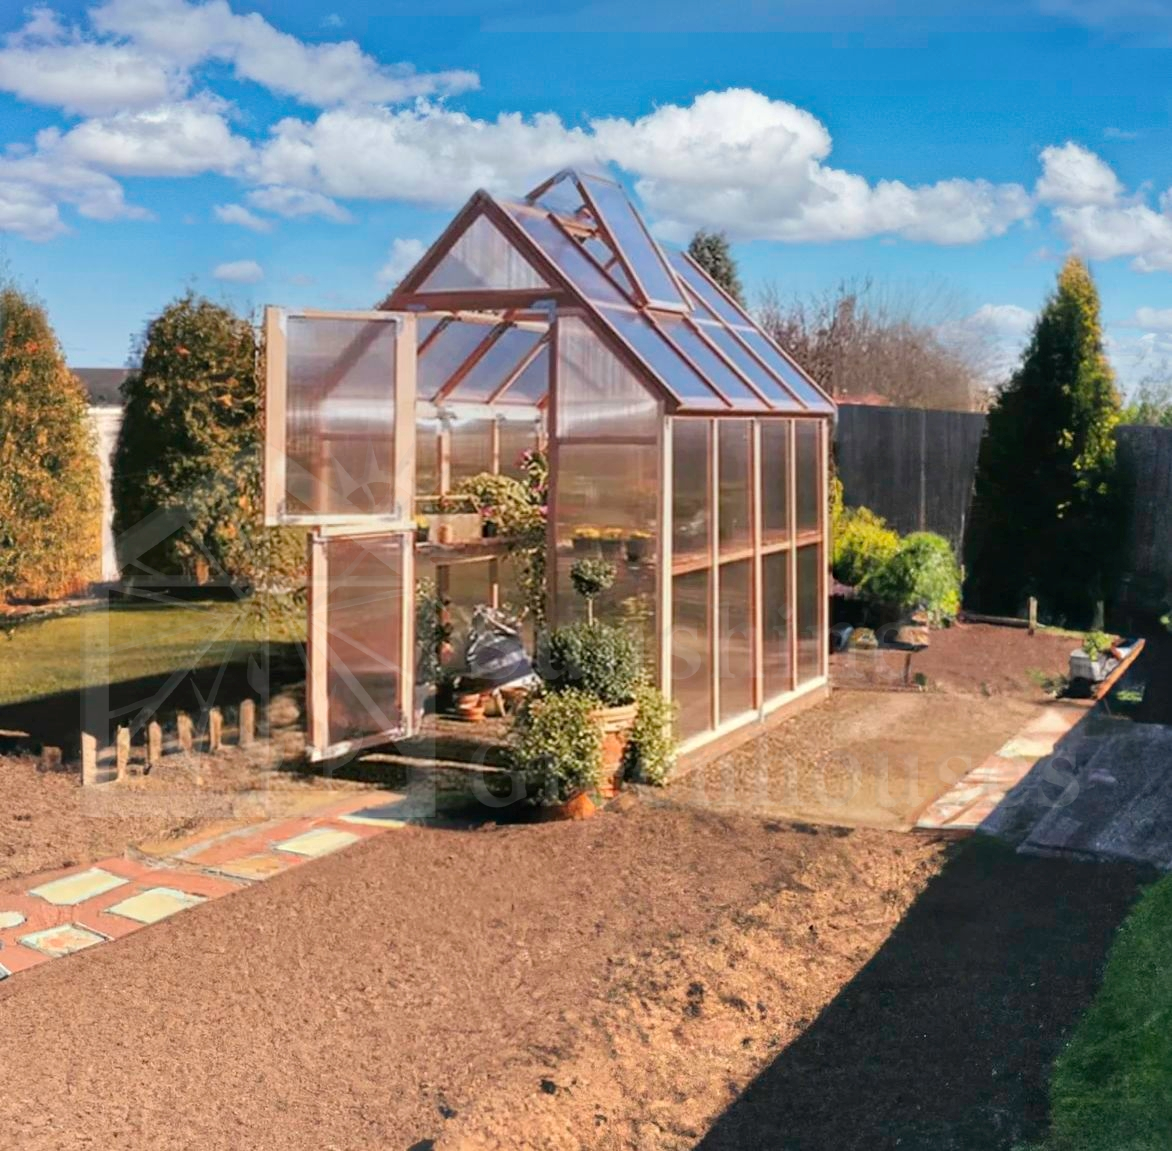 sunshine 6' x 8' hobby greenhouse kit in backyard garden